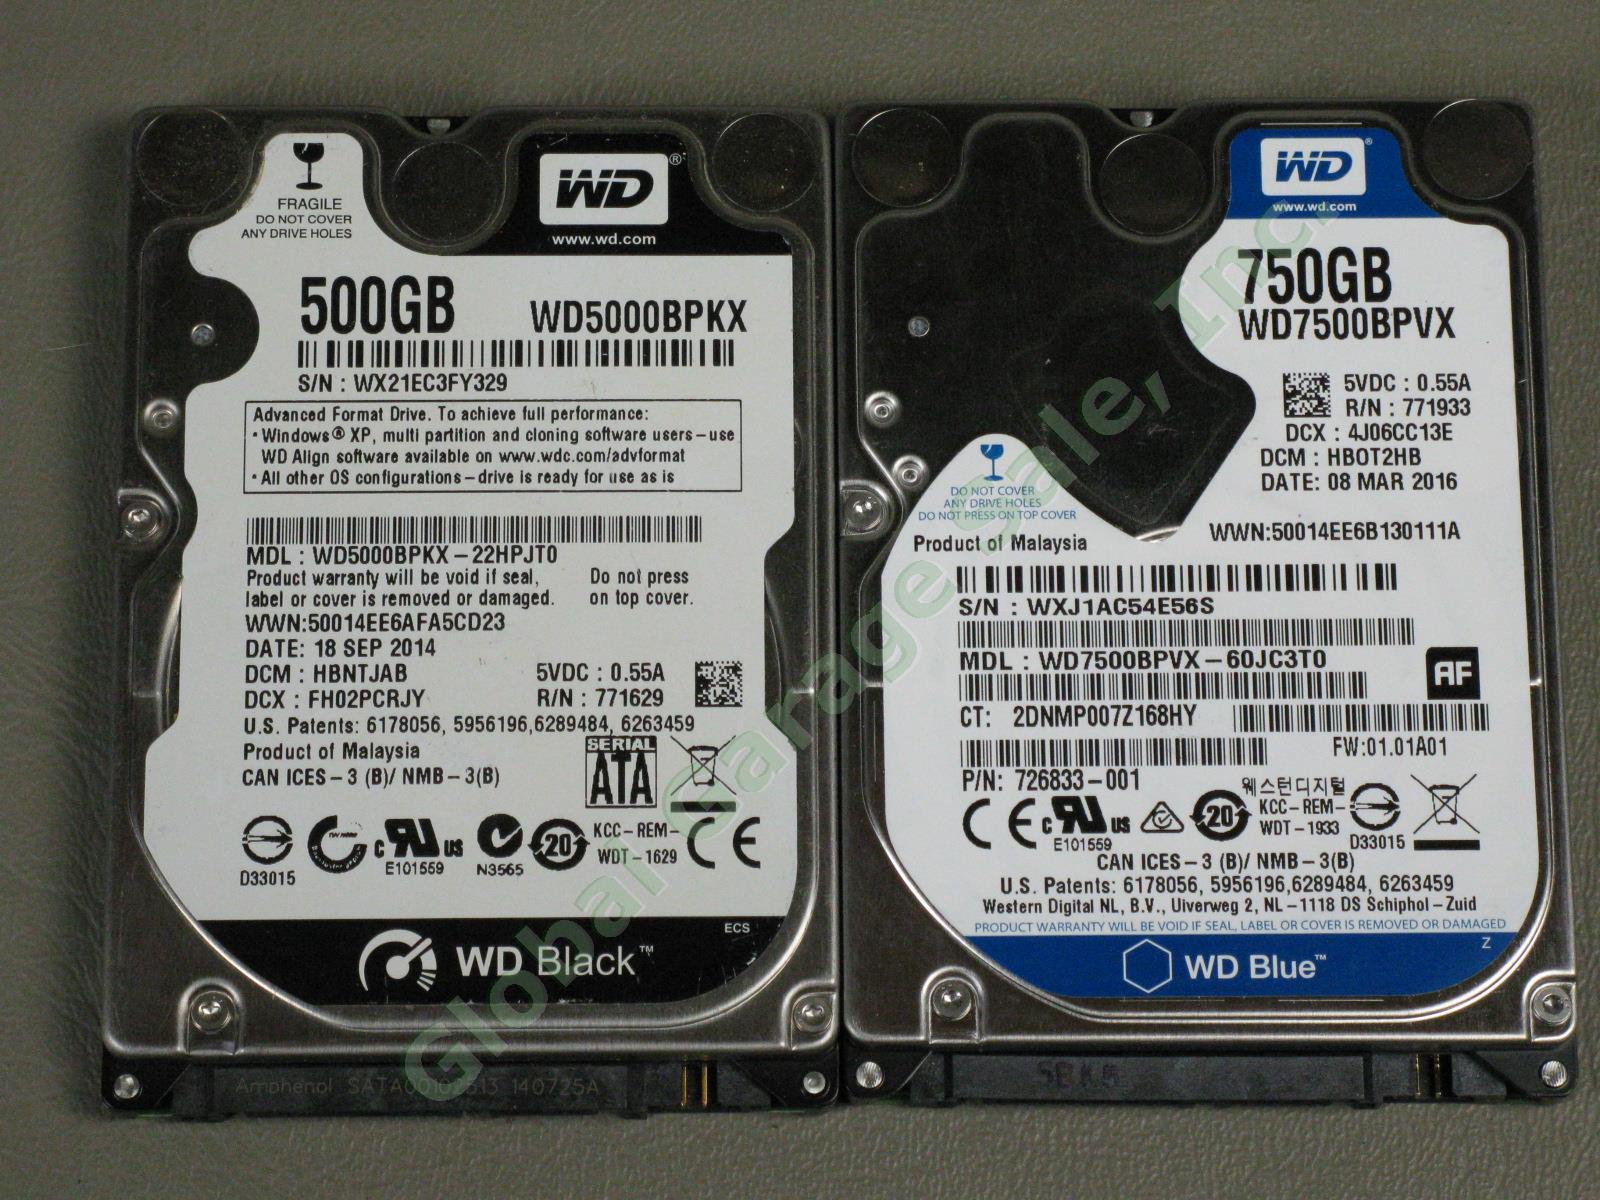 6 Laptop Drives 240GB SSD 2.5" Sandisk SDSSDA-240G PNY SSD7SC240GSA-OPM + 4 HDD 5